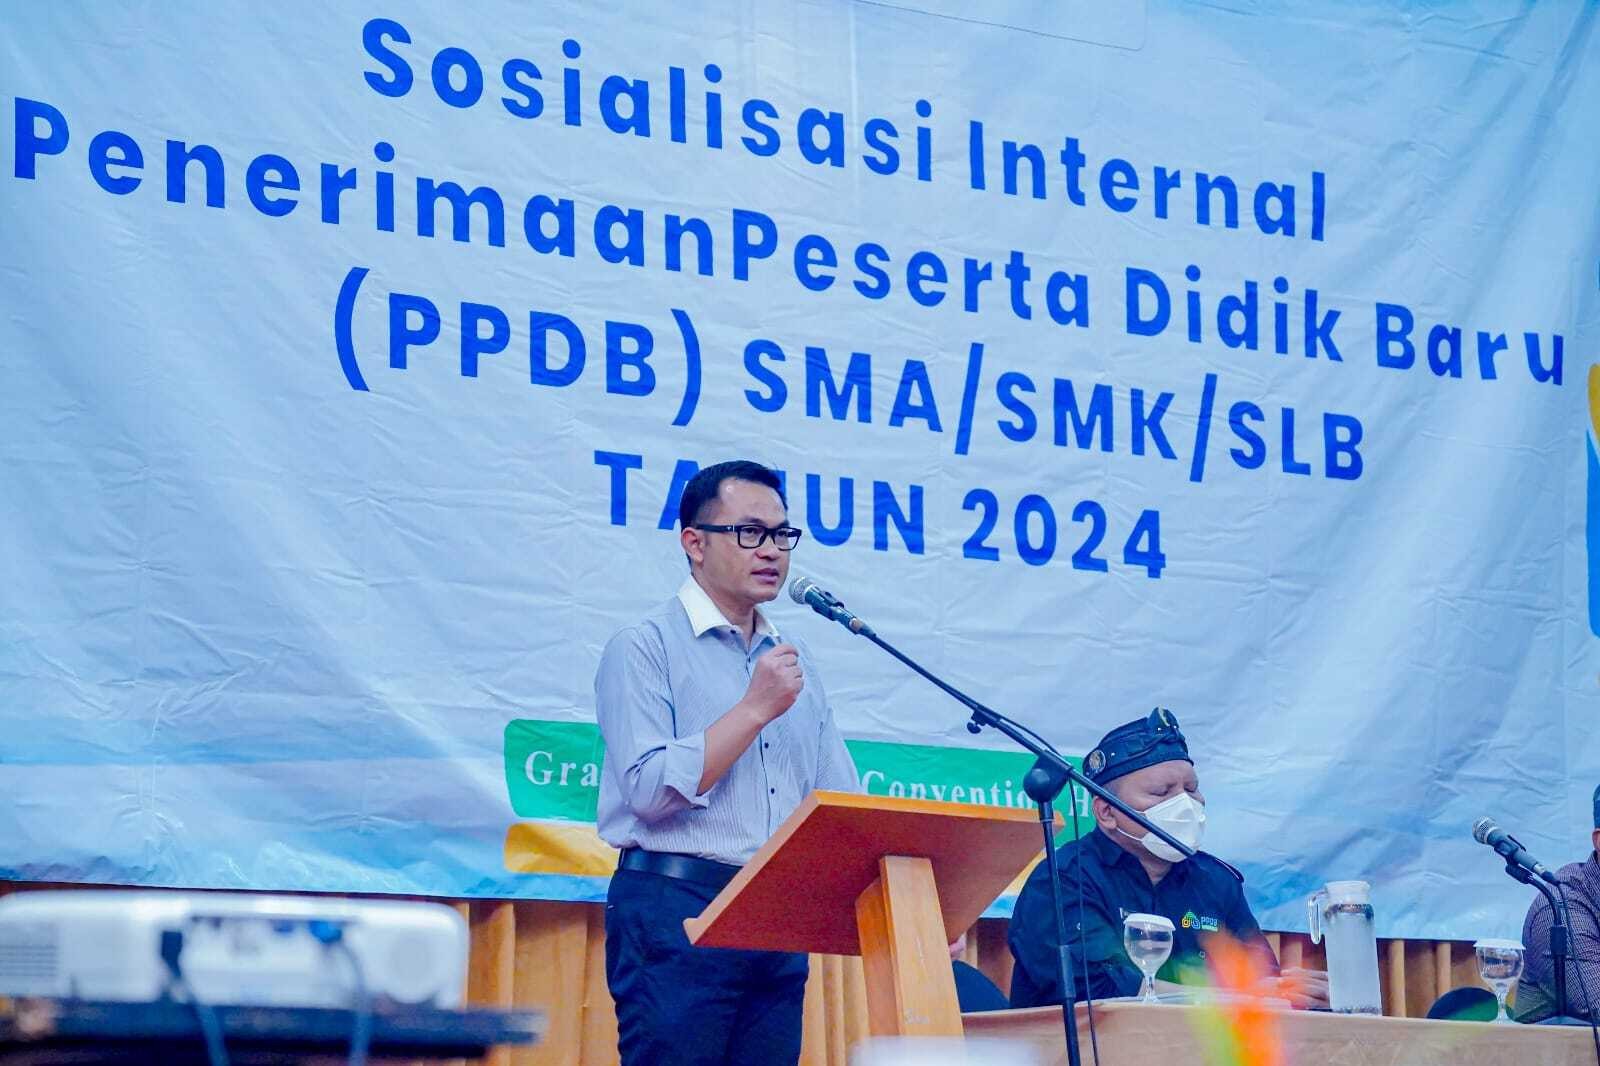 Sosialisasi Internal PPDB 2024, Hadirkan PPDB yang Lebih Bersih dengan Jujur dari Awal